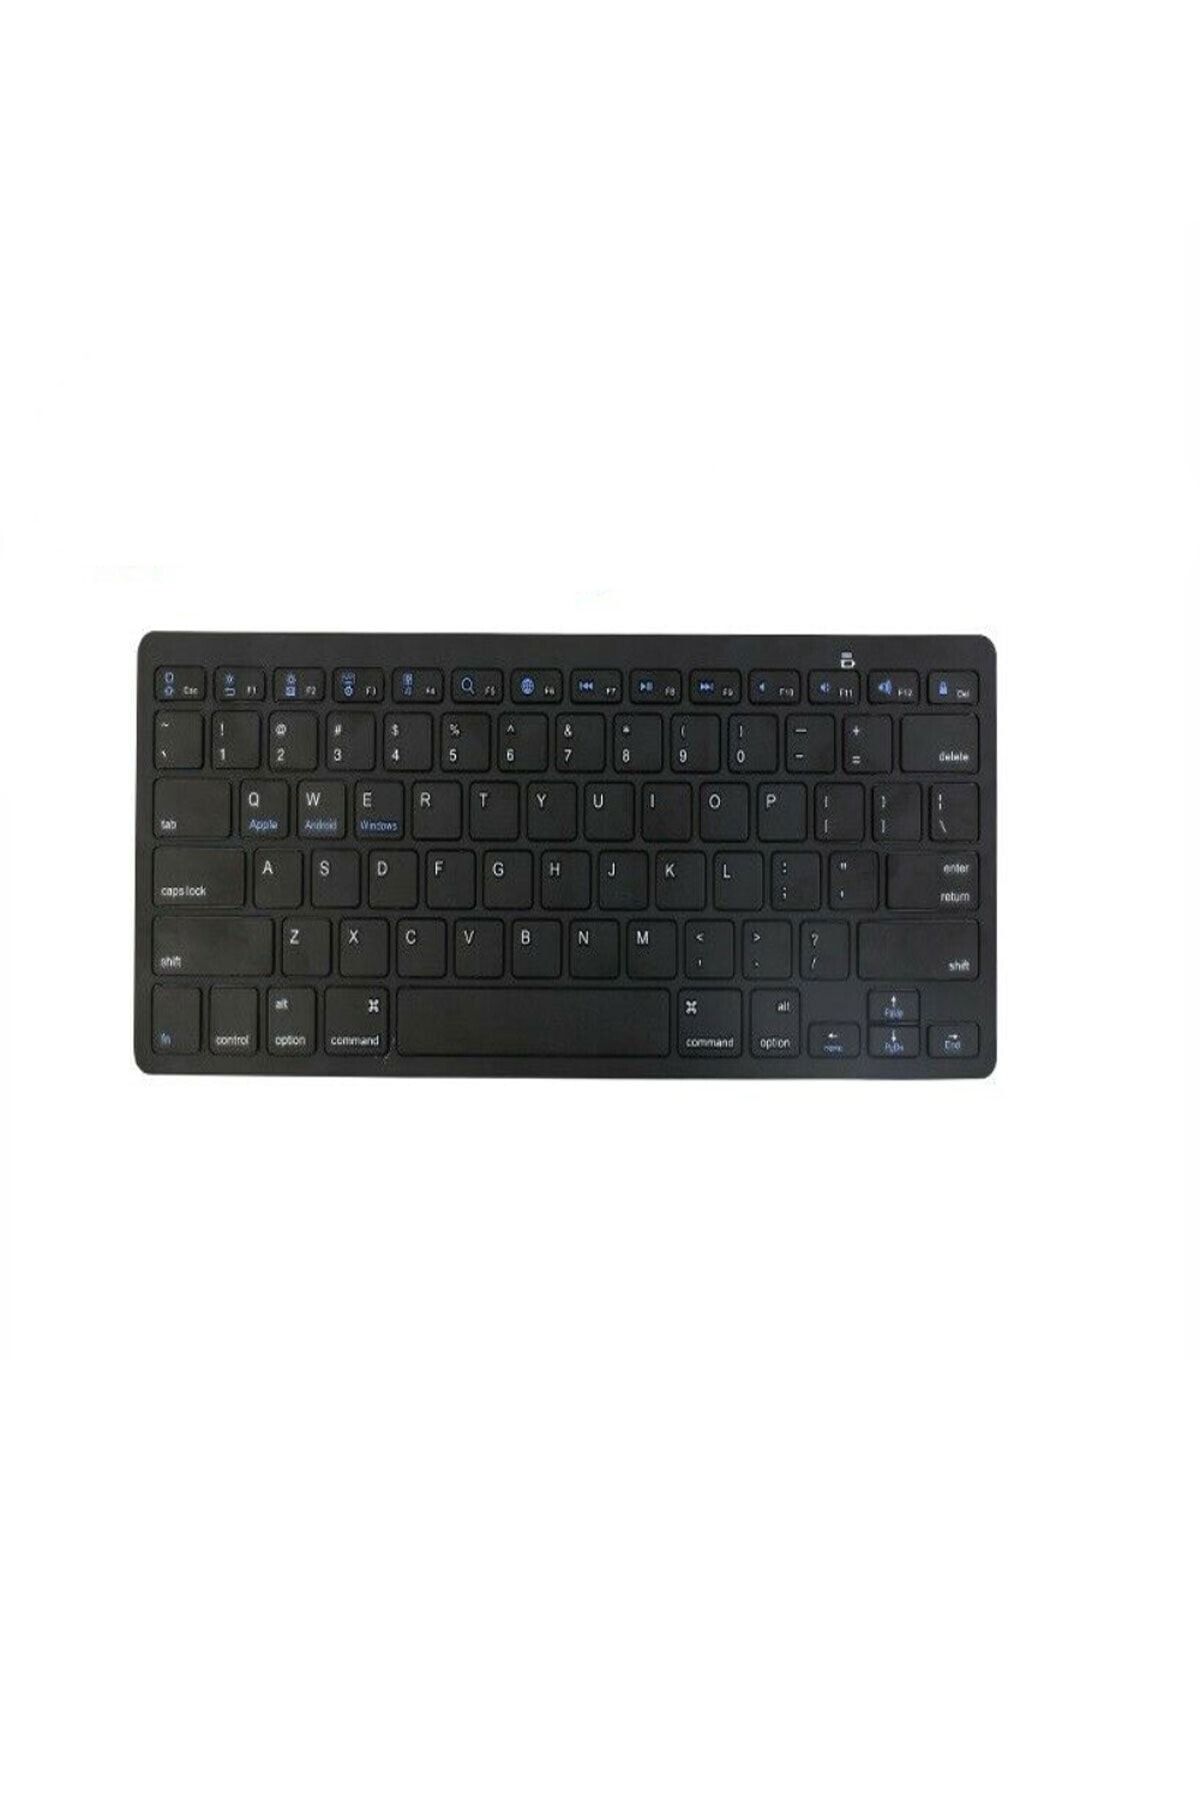 TahTicMer Hometech Mıd 710 Bluetooth Klavye Slim Model Kablosuz Wireless Q Klavye